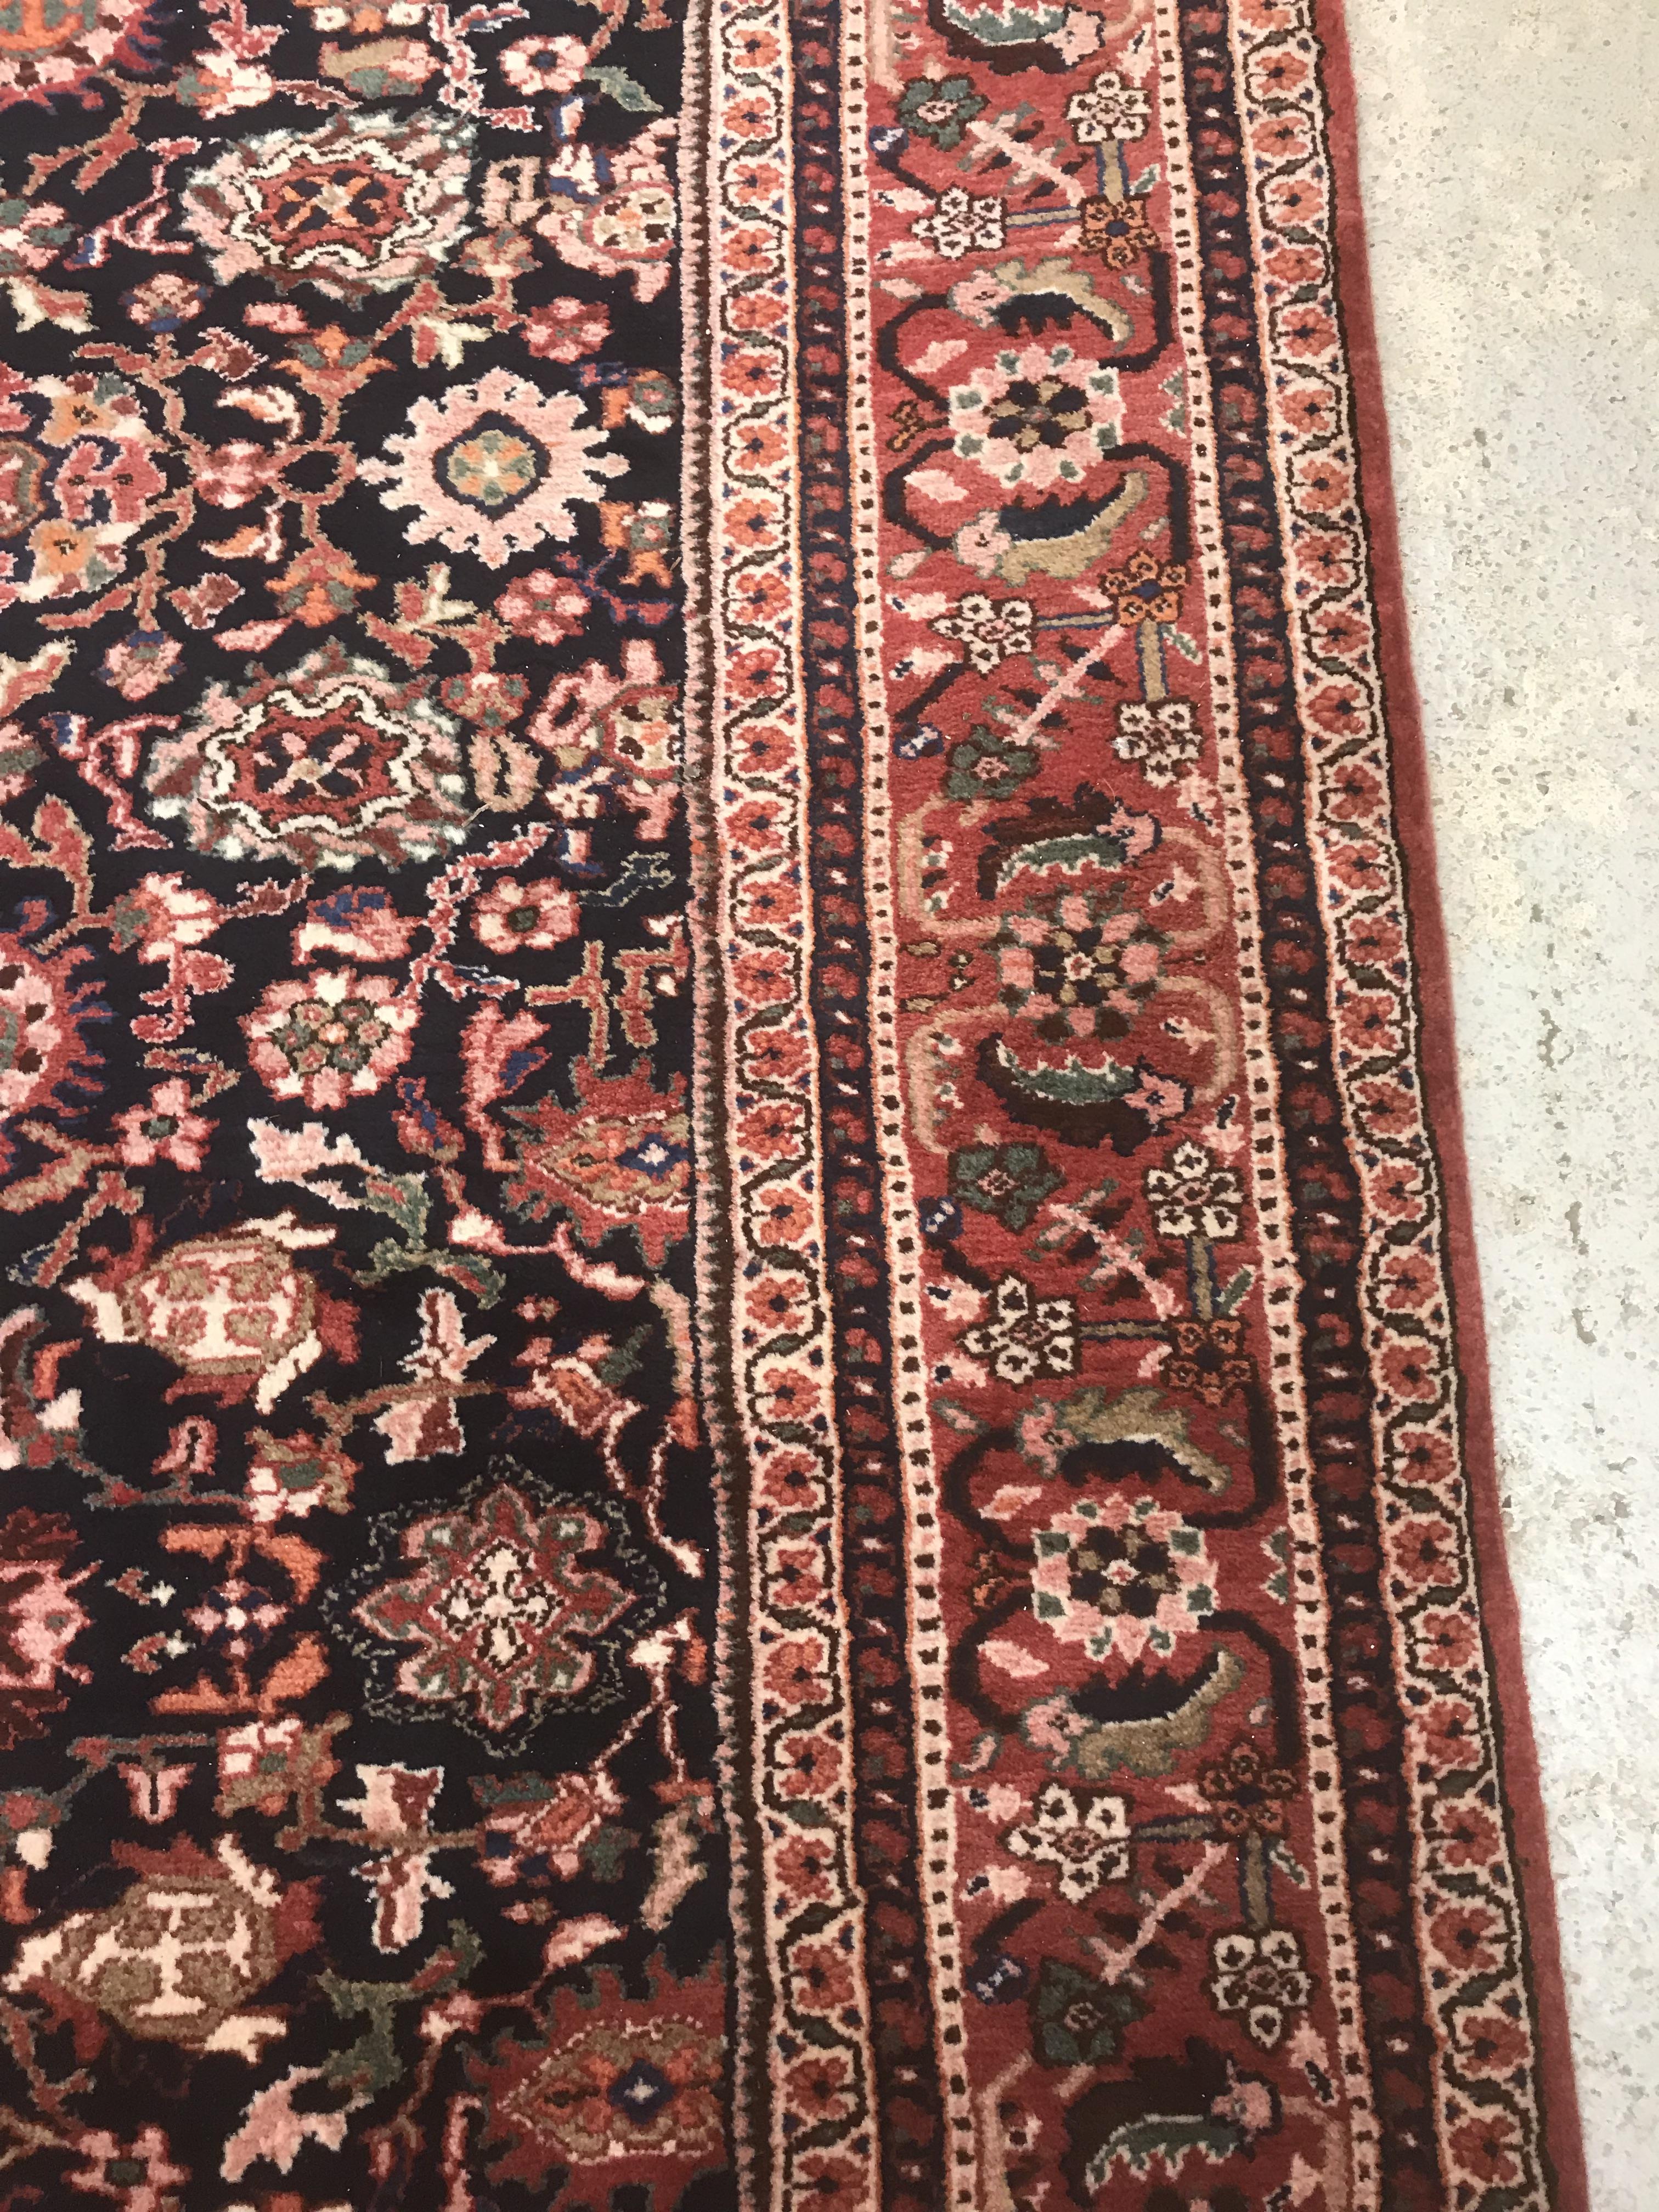 A 20th Century Afghan Kazak carpet, - Image 6 of 36